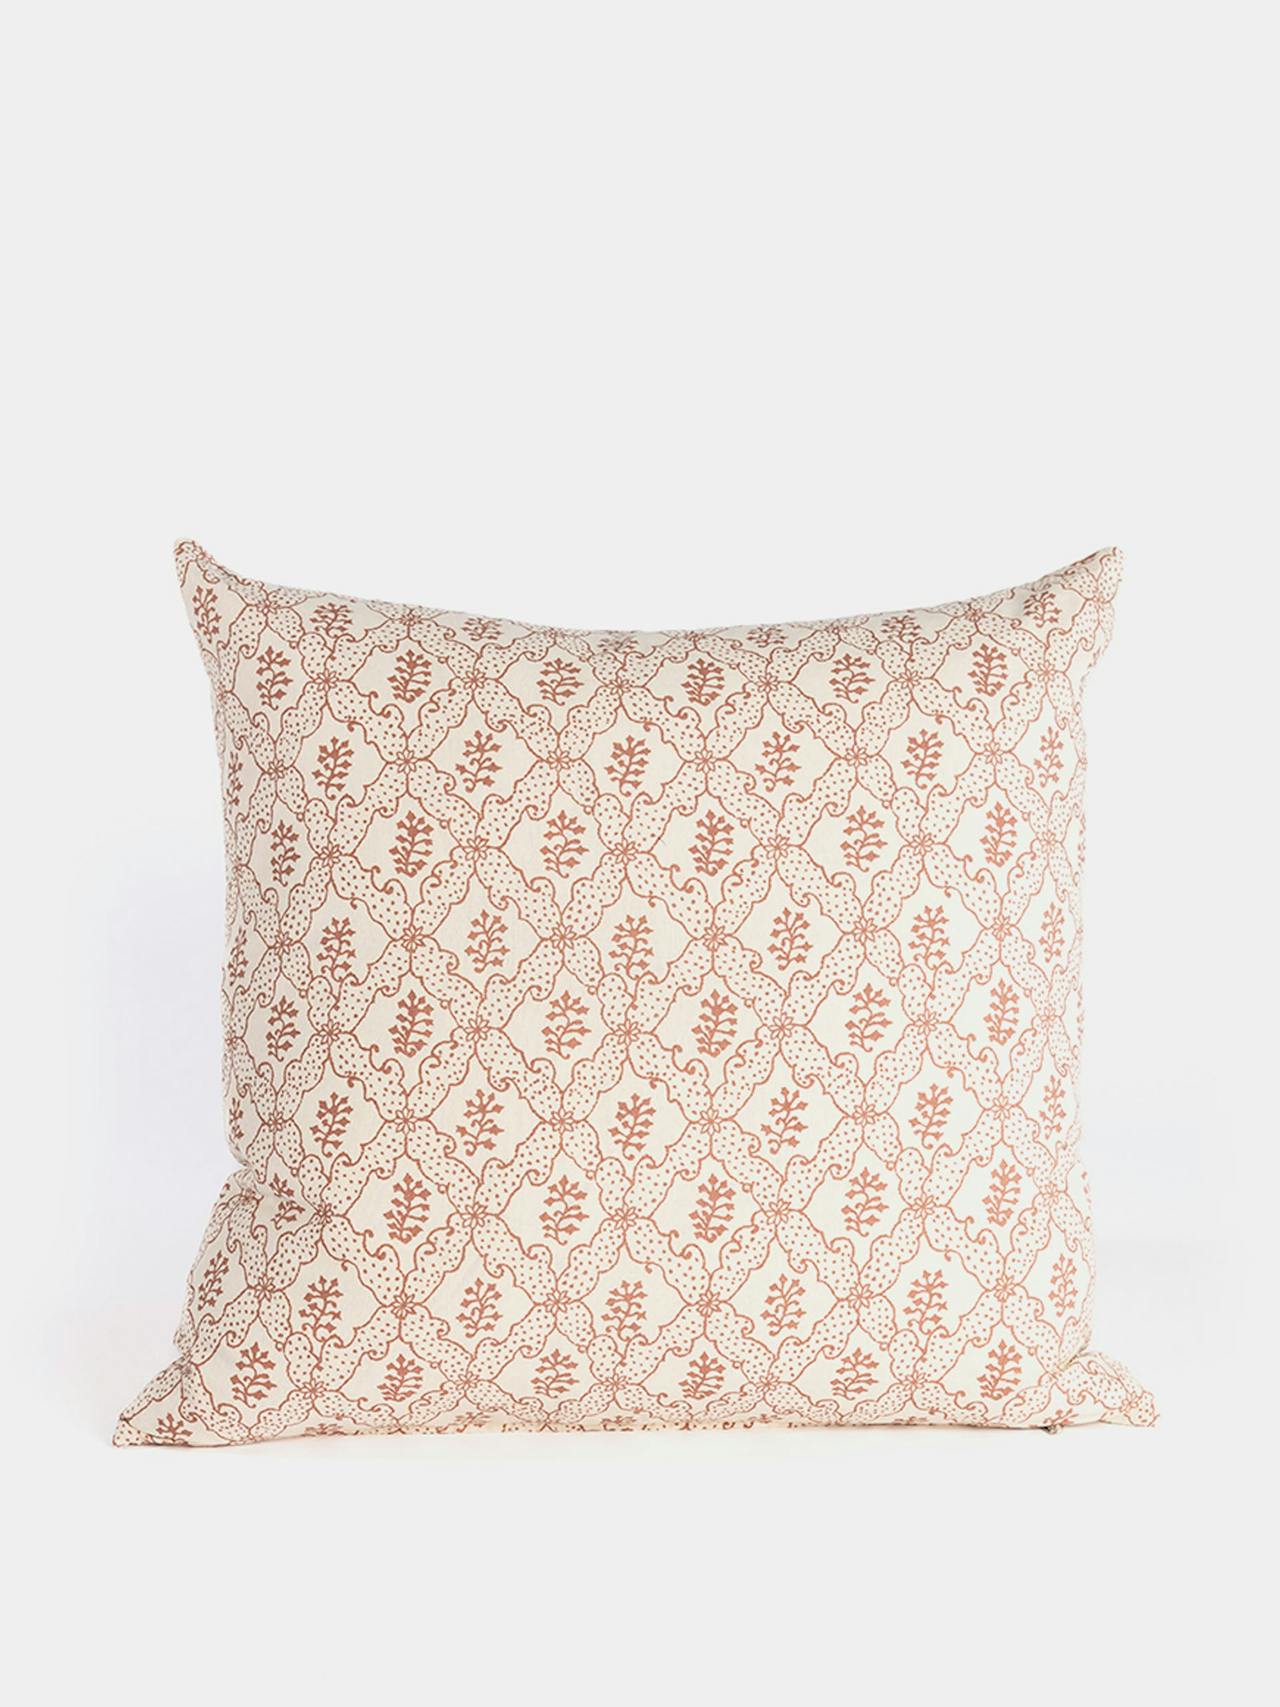 Lattice flower scatter cushion in pink